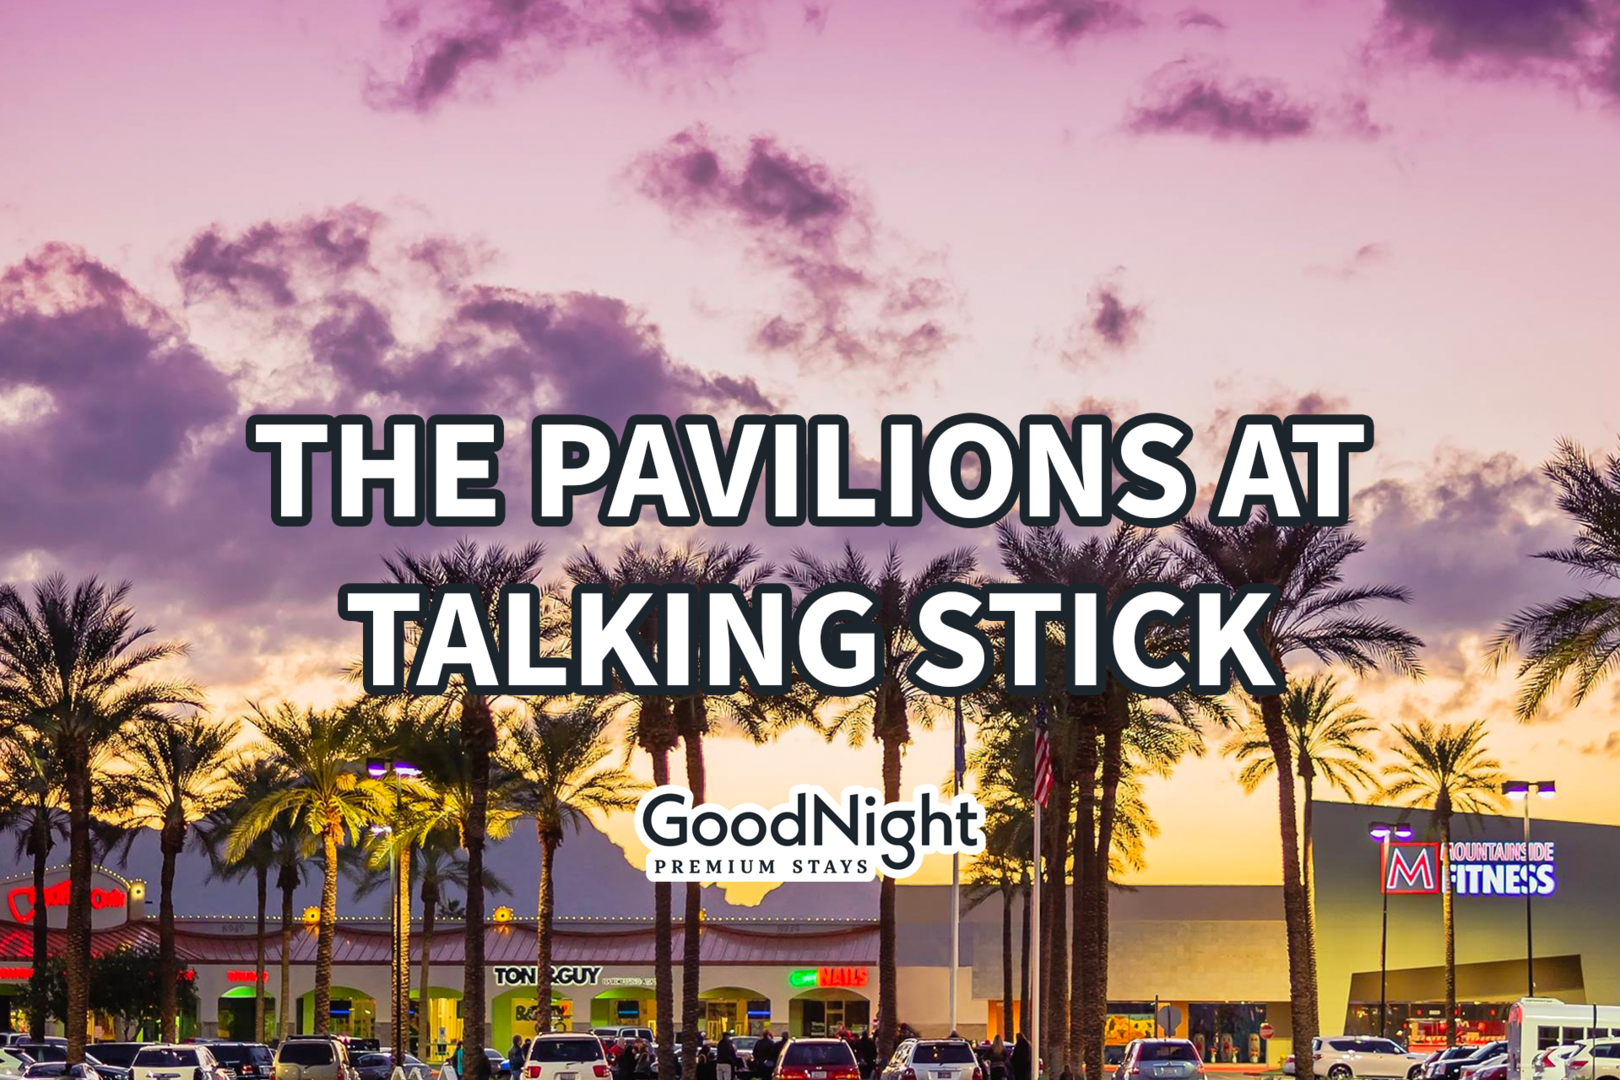 6 mins: The Pavilions at Talking Stick